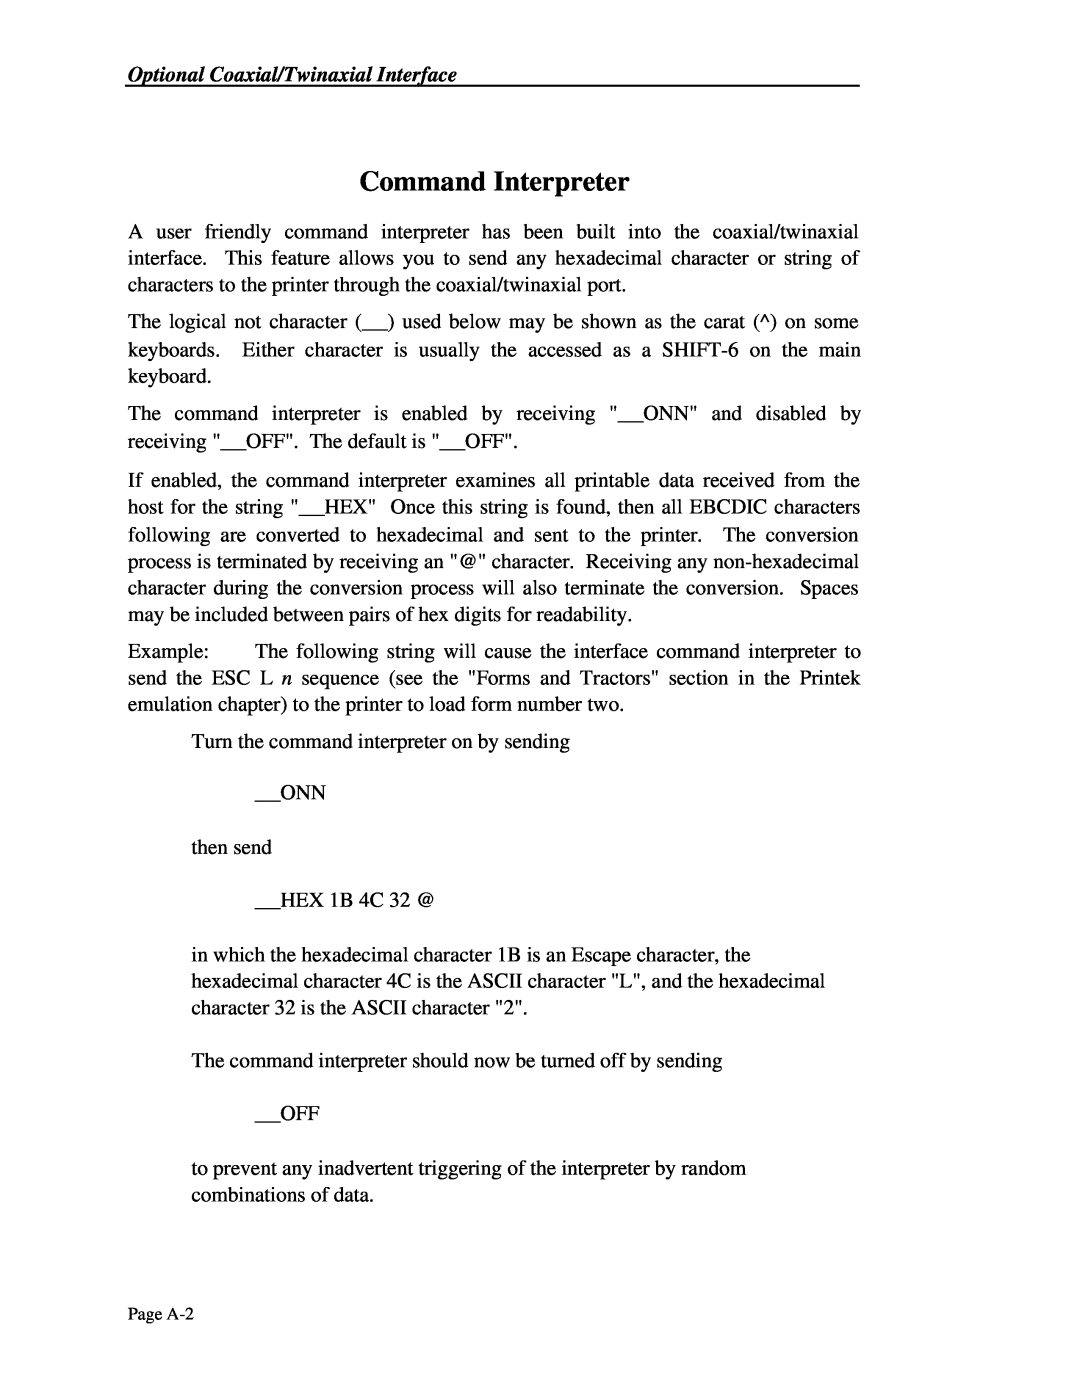 Printek 4503, 4300, 4500 manual Command Interpreter, Optional Coaxial/Twinaxial Interface 